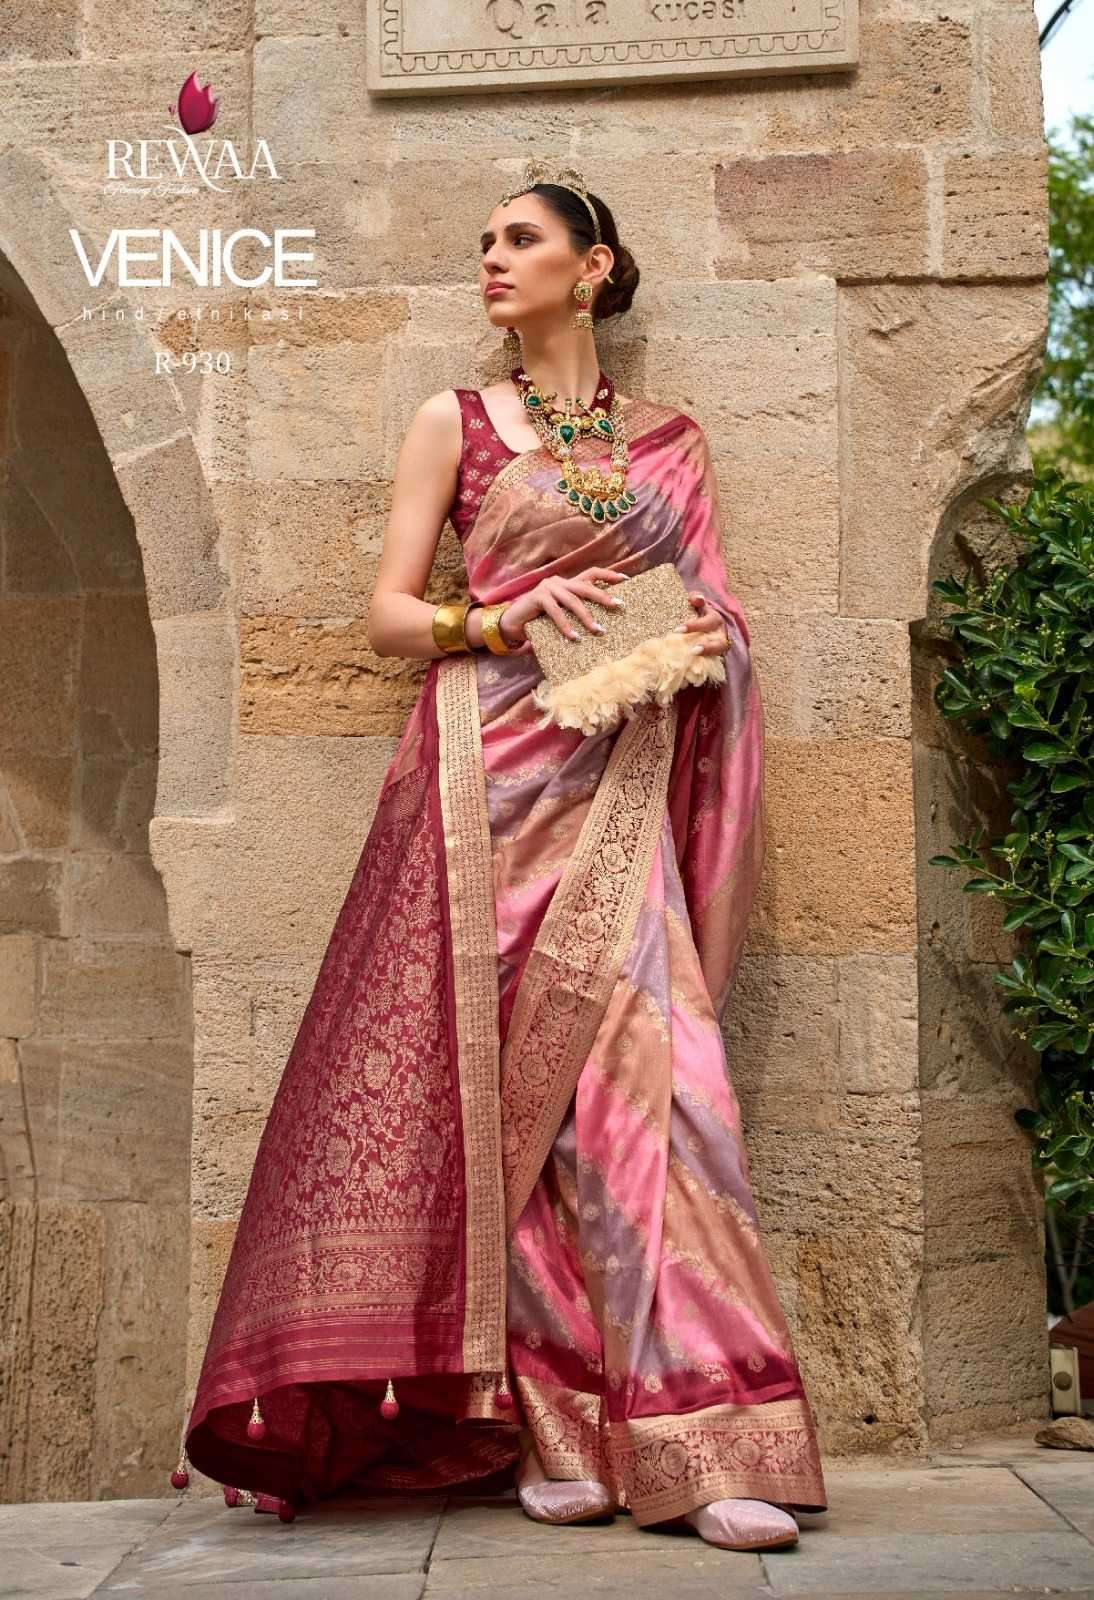 Rewaa fashion Venice Silk with Party wear look Fancy saree c...